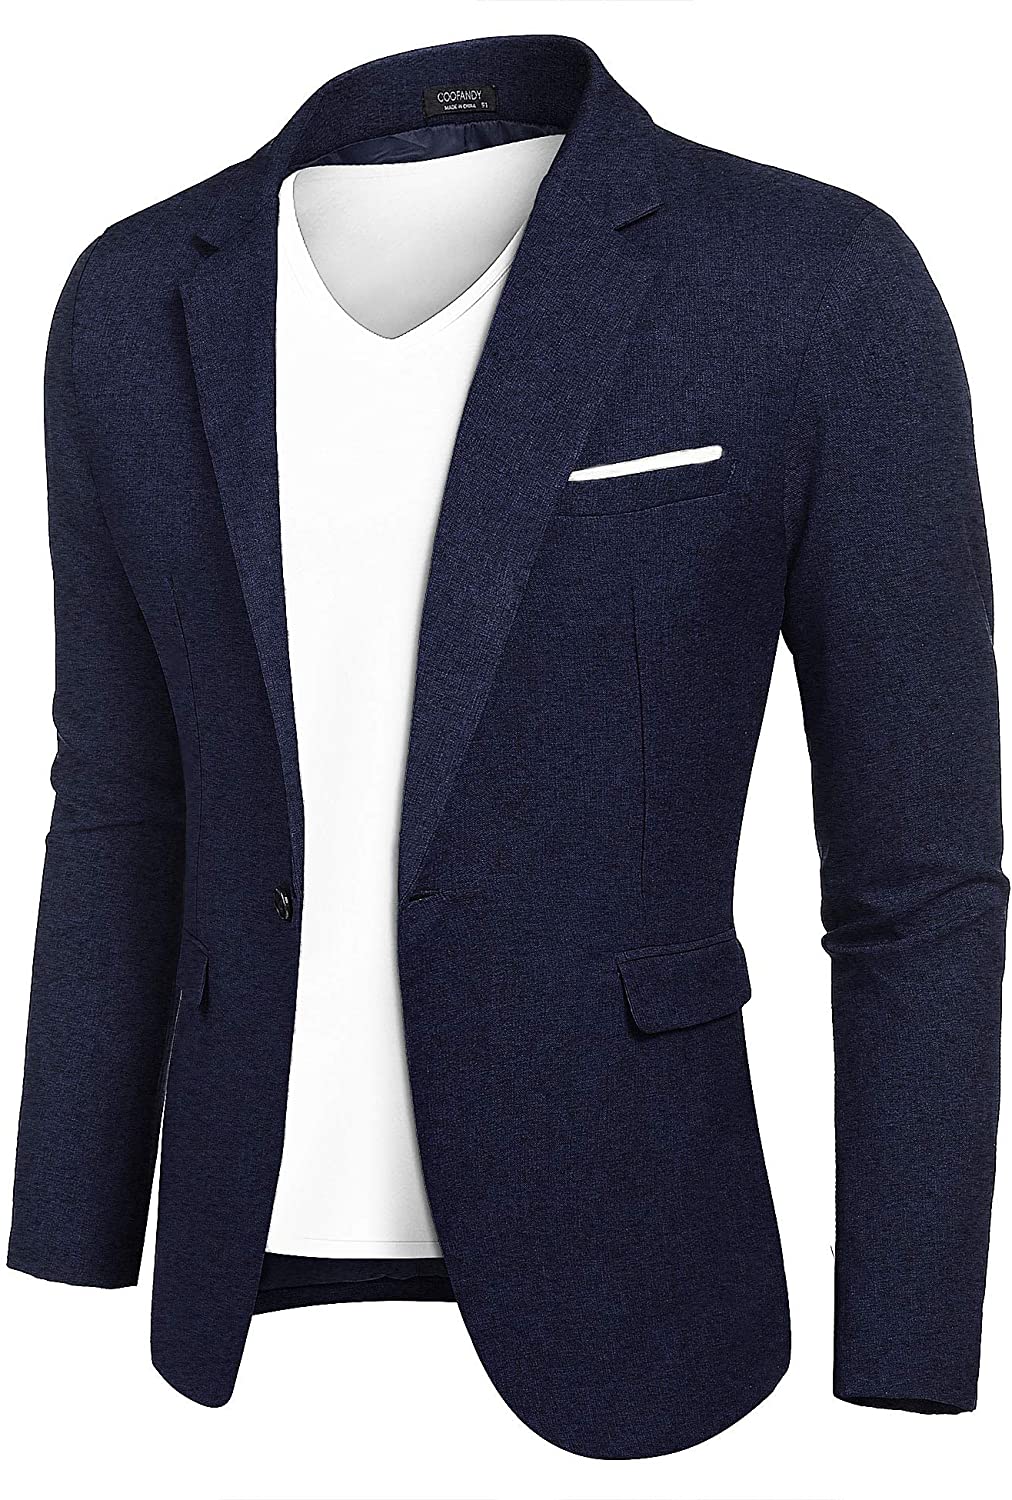 COOFANDY Men's Casual Sports Coats Lightweight Suit Blazer Jackets One Button 